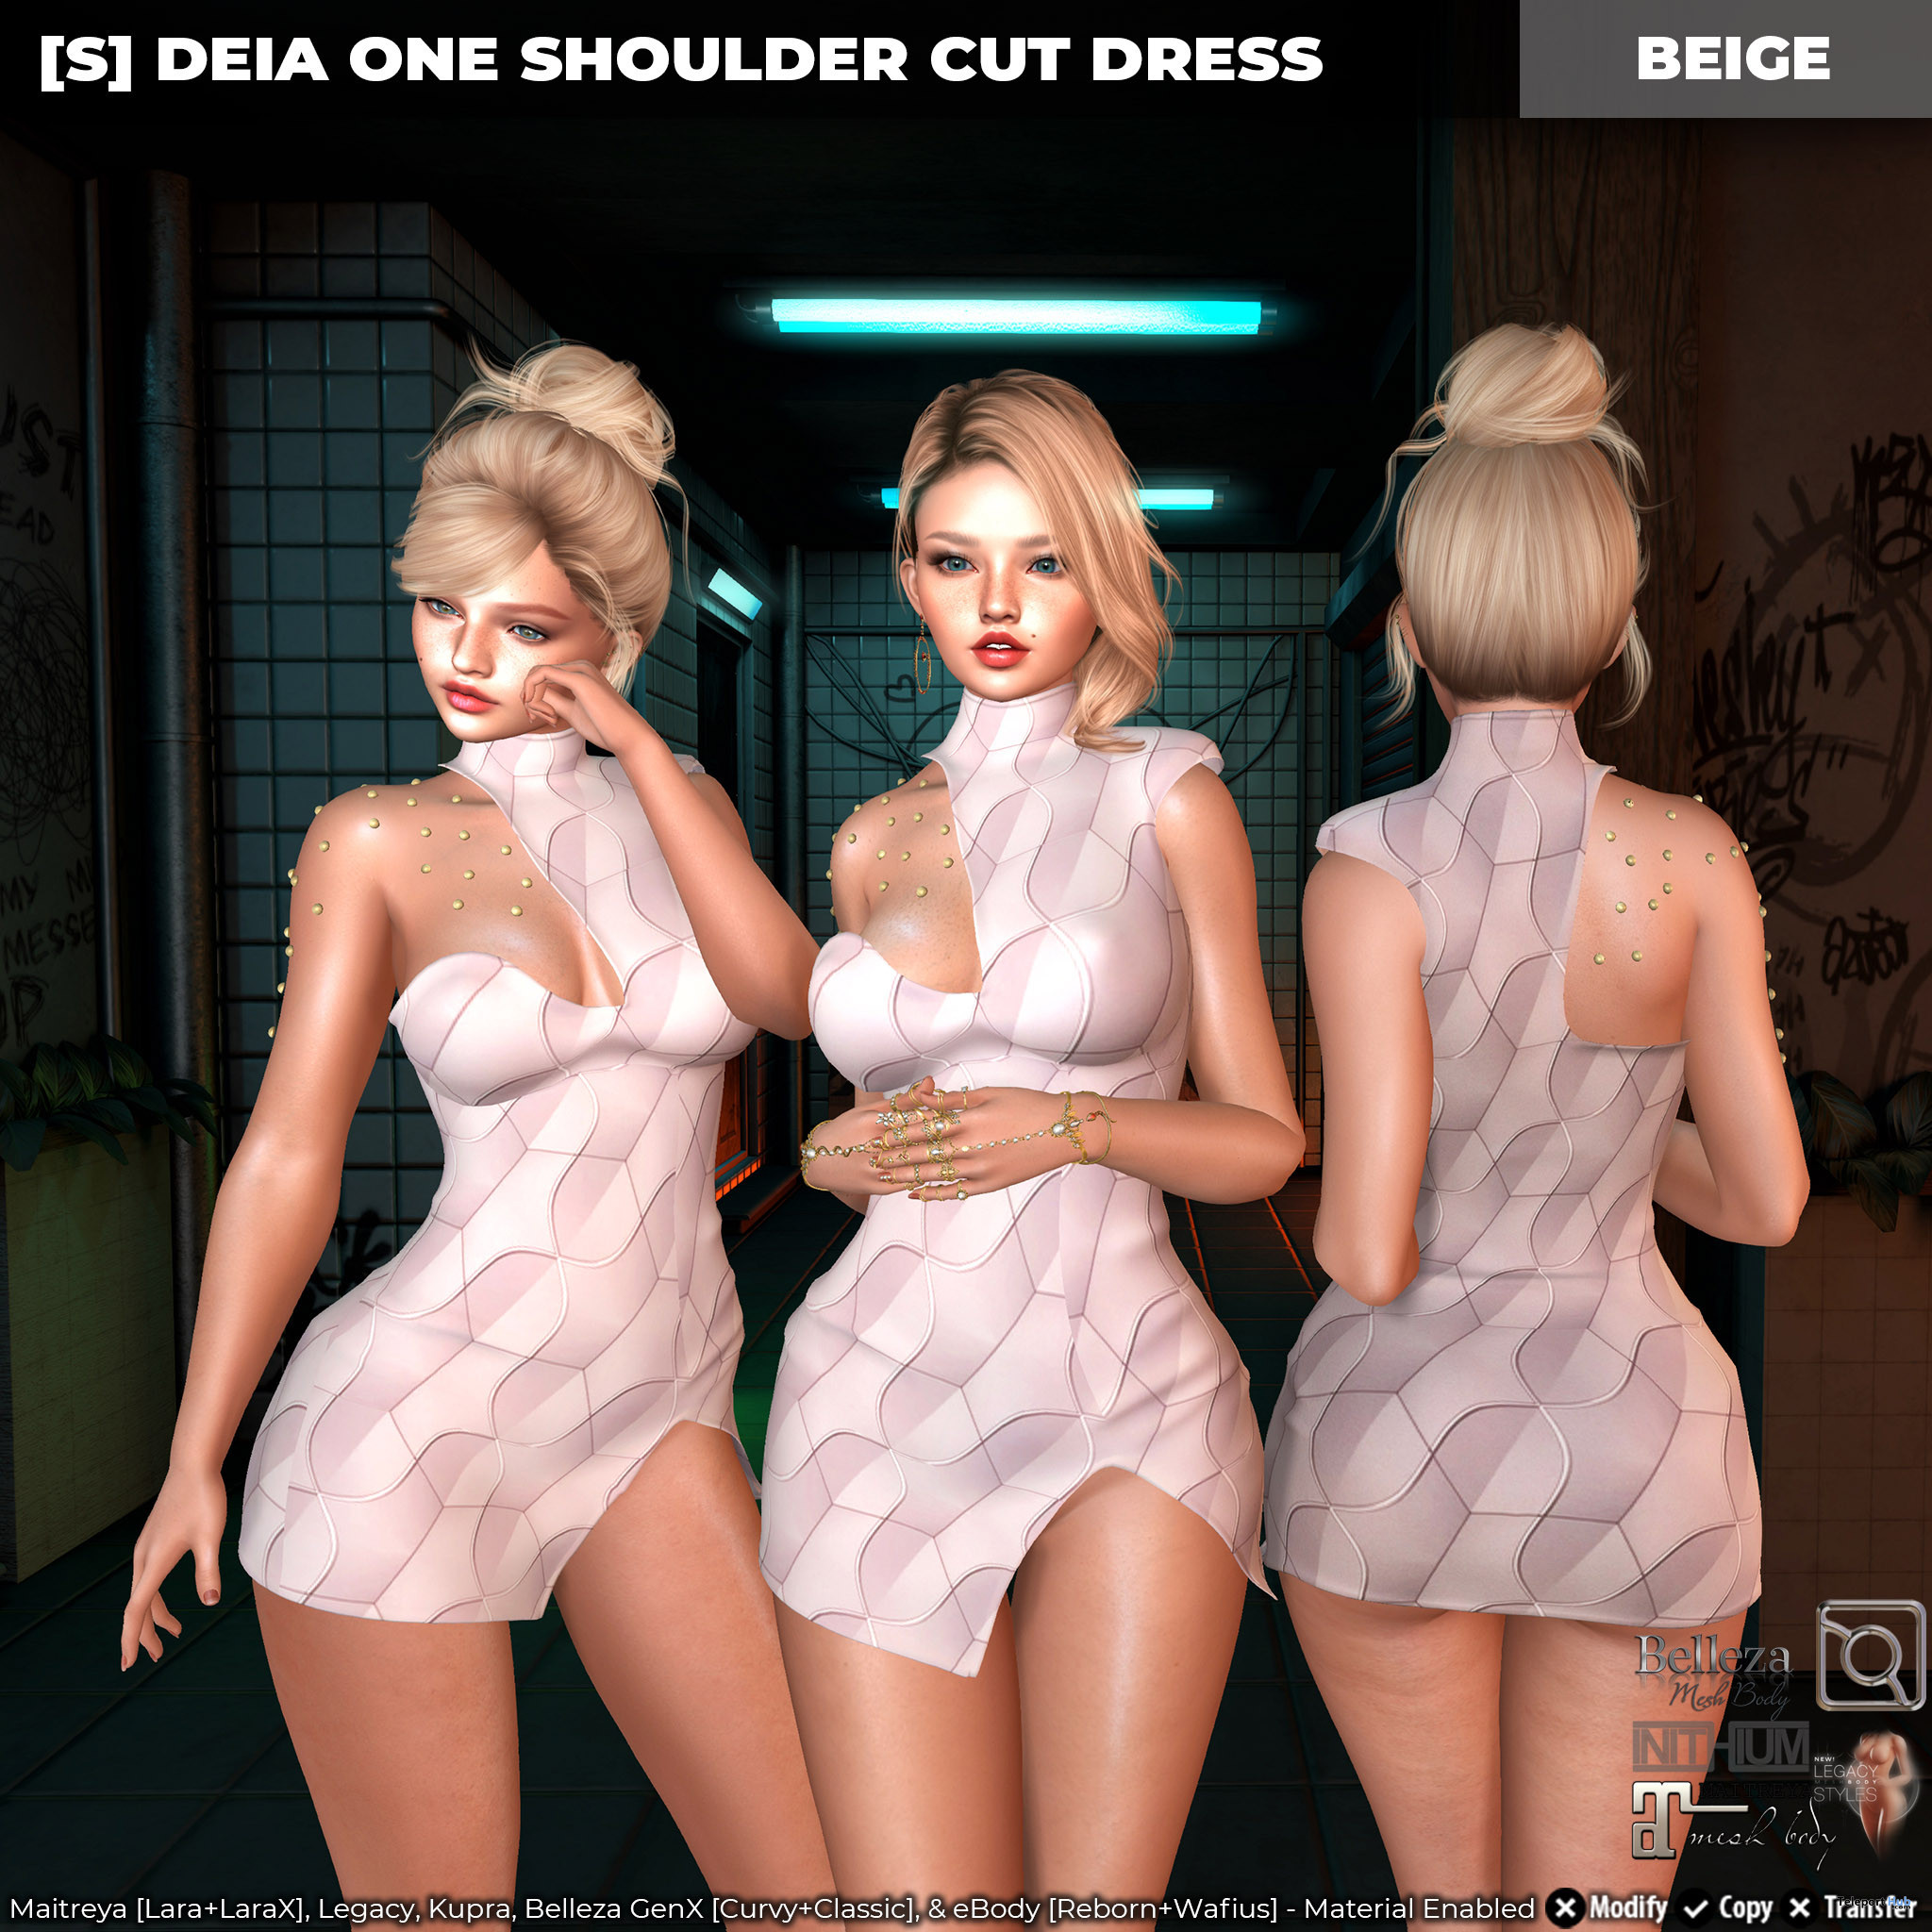 New Release: [S] Deia One Shoulder Cut Dress by [satus Inc] - Teleport Hub - teleporthub.com